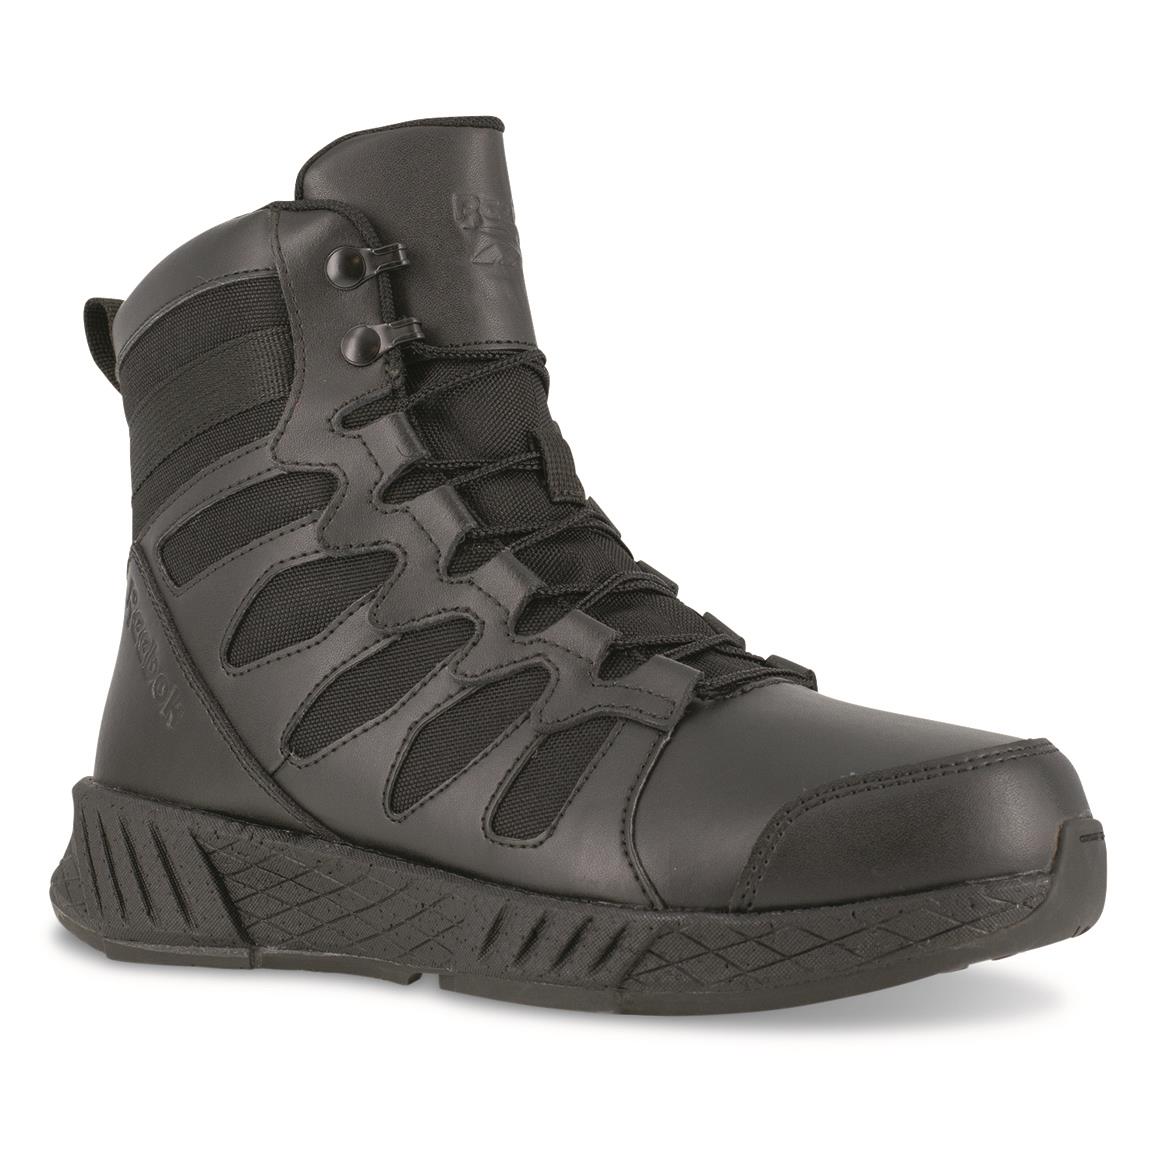 Reebok Men's 6" Floatride Energy Side-zip Tactical Boots, Black